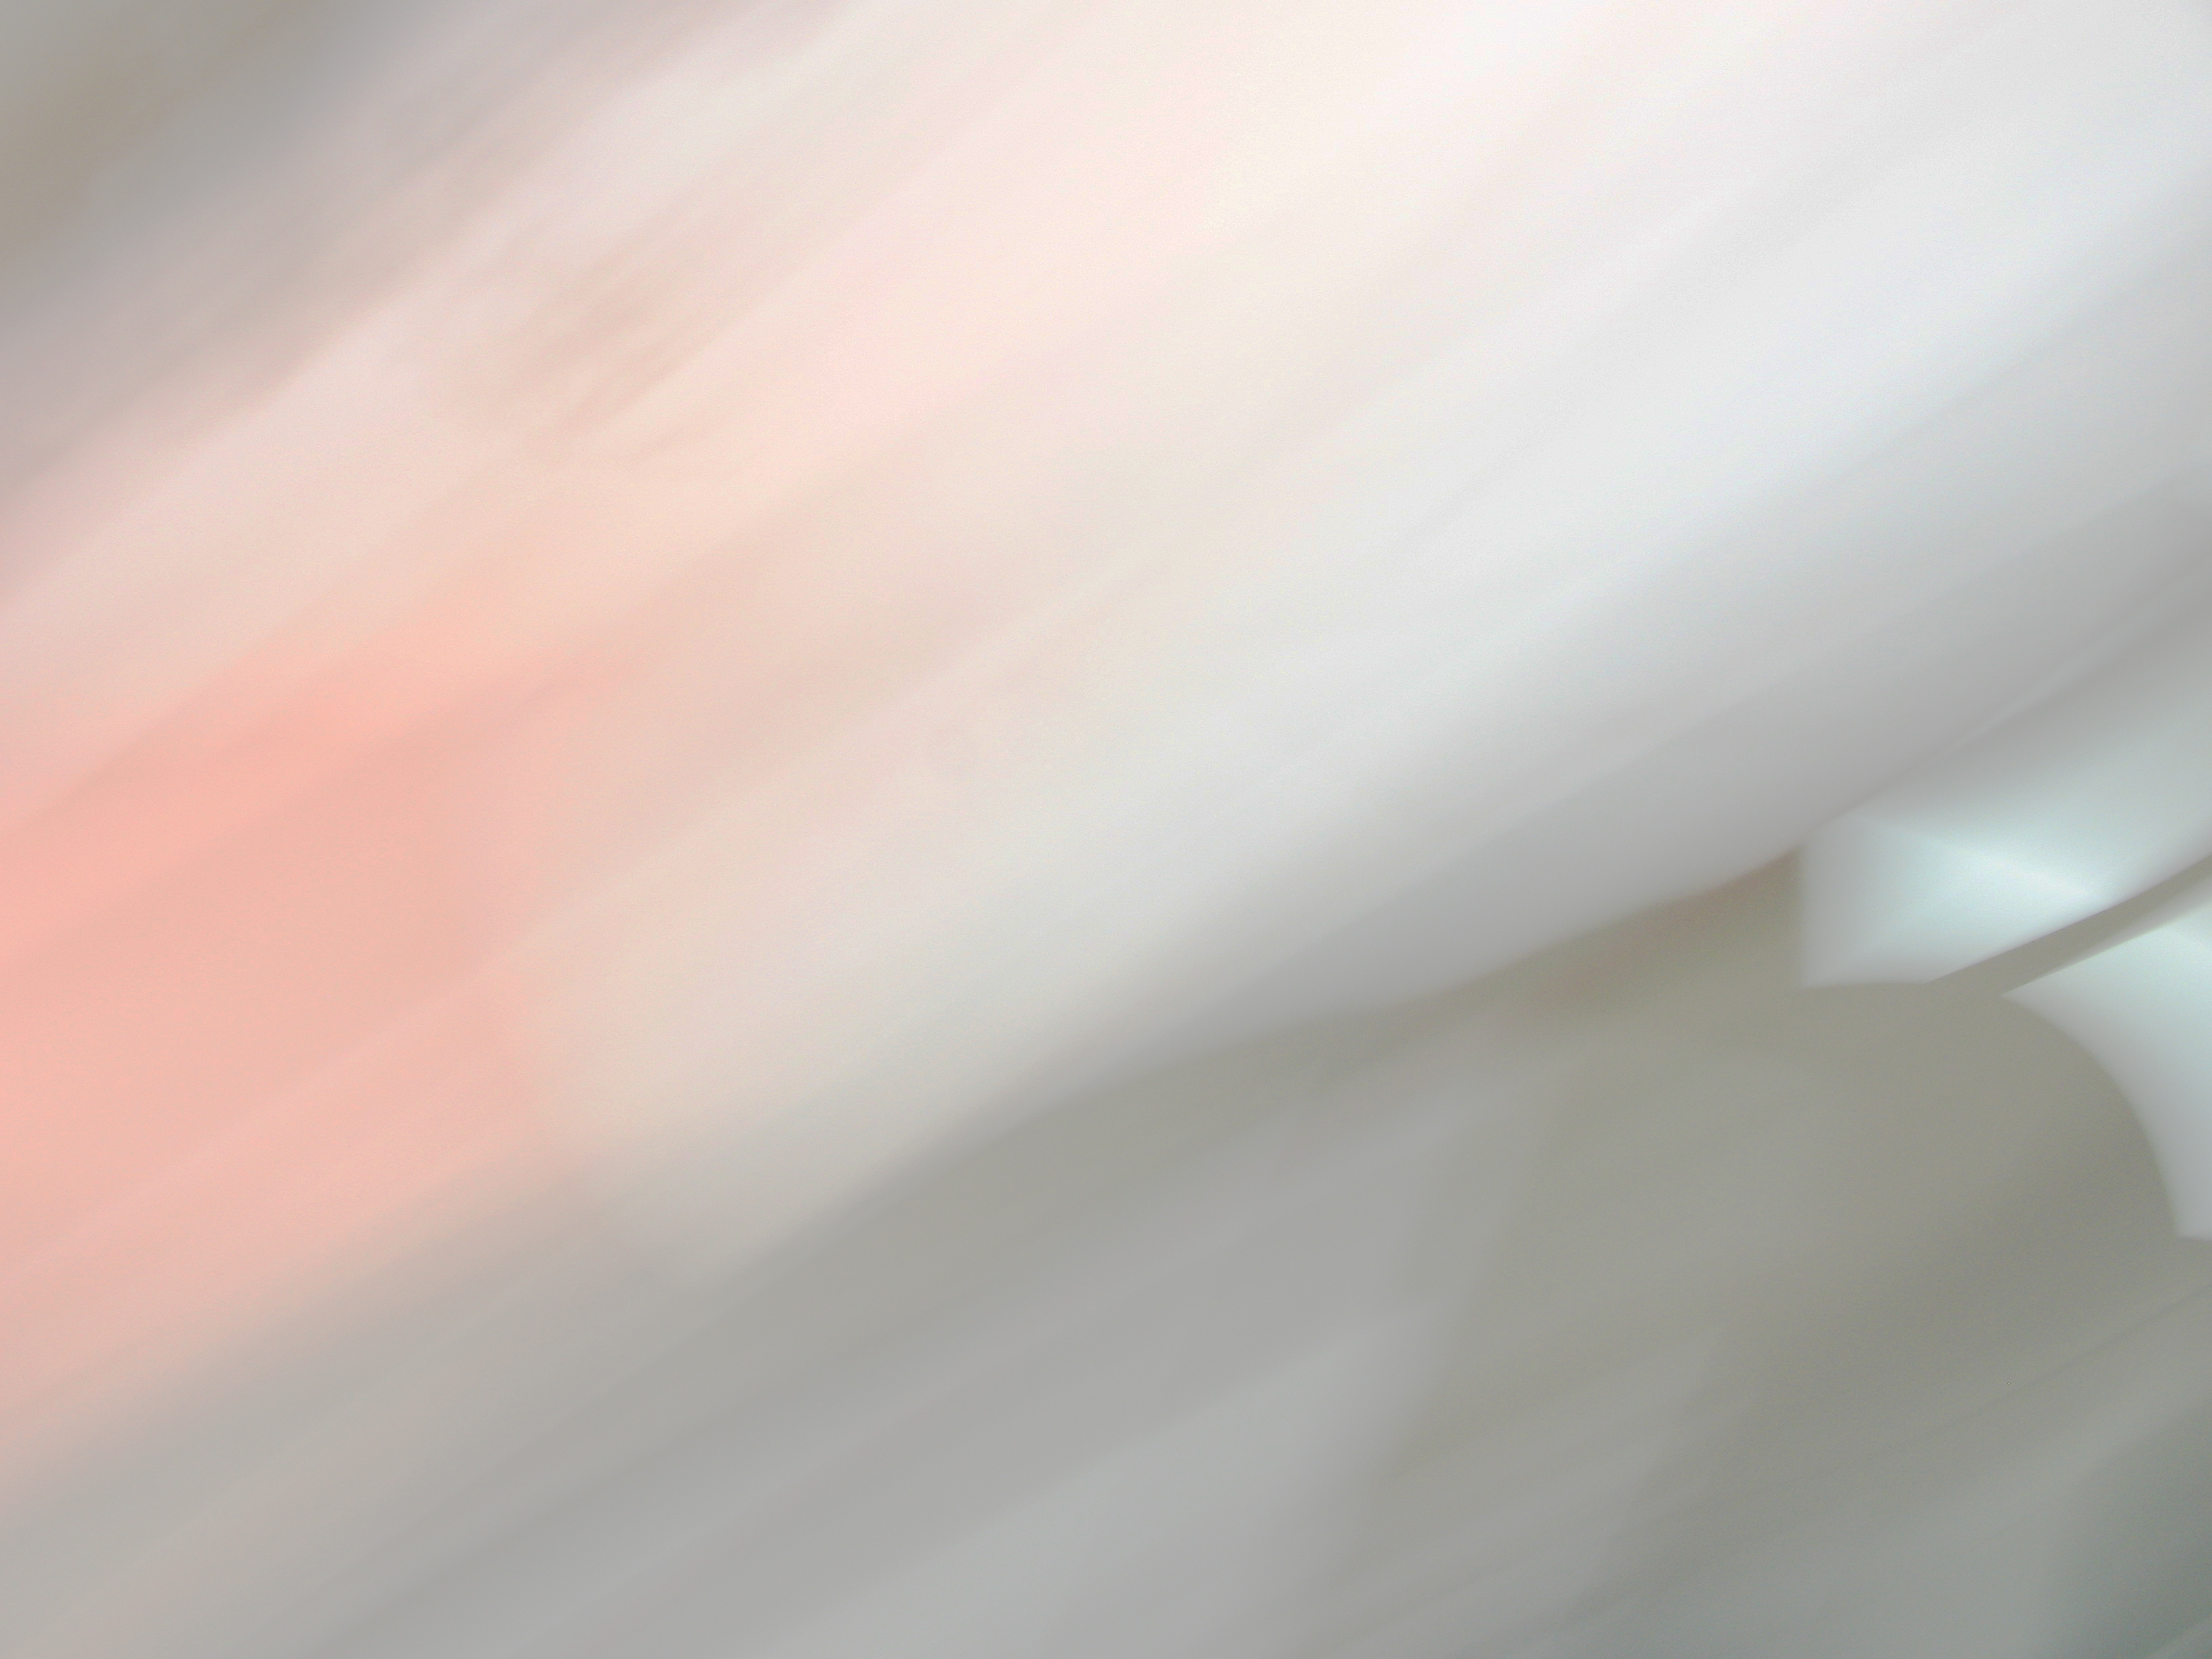 Motion blur background texture image